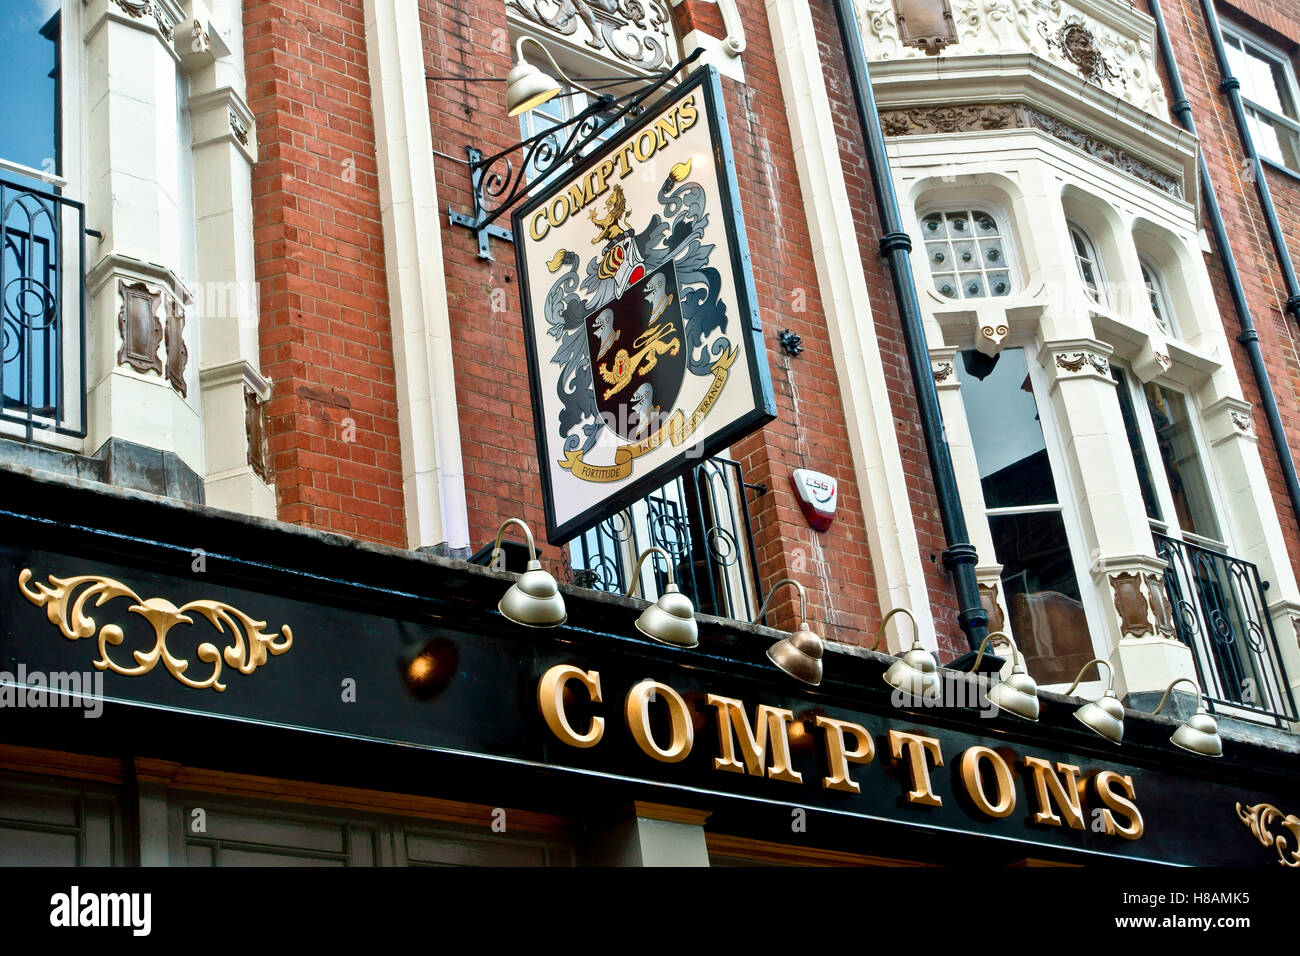 Comptons Pub, Gay Pub, Old Compton Street, im Herzen von Soho's Gay Village, London, England, Großbritannien, Großbritannien, Großbritannien, Großbritannien, Europa. Stockfoto